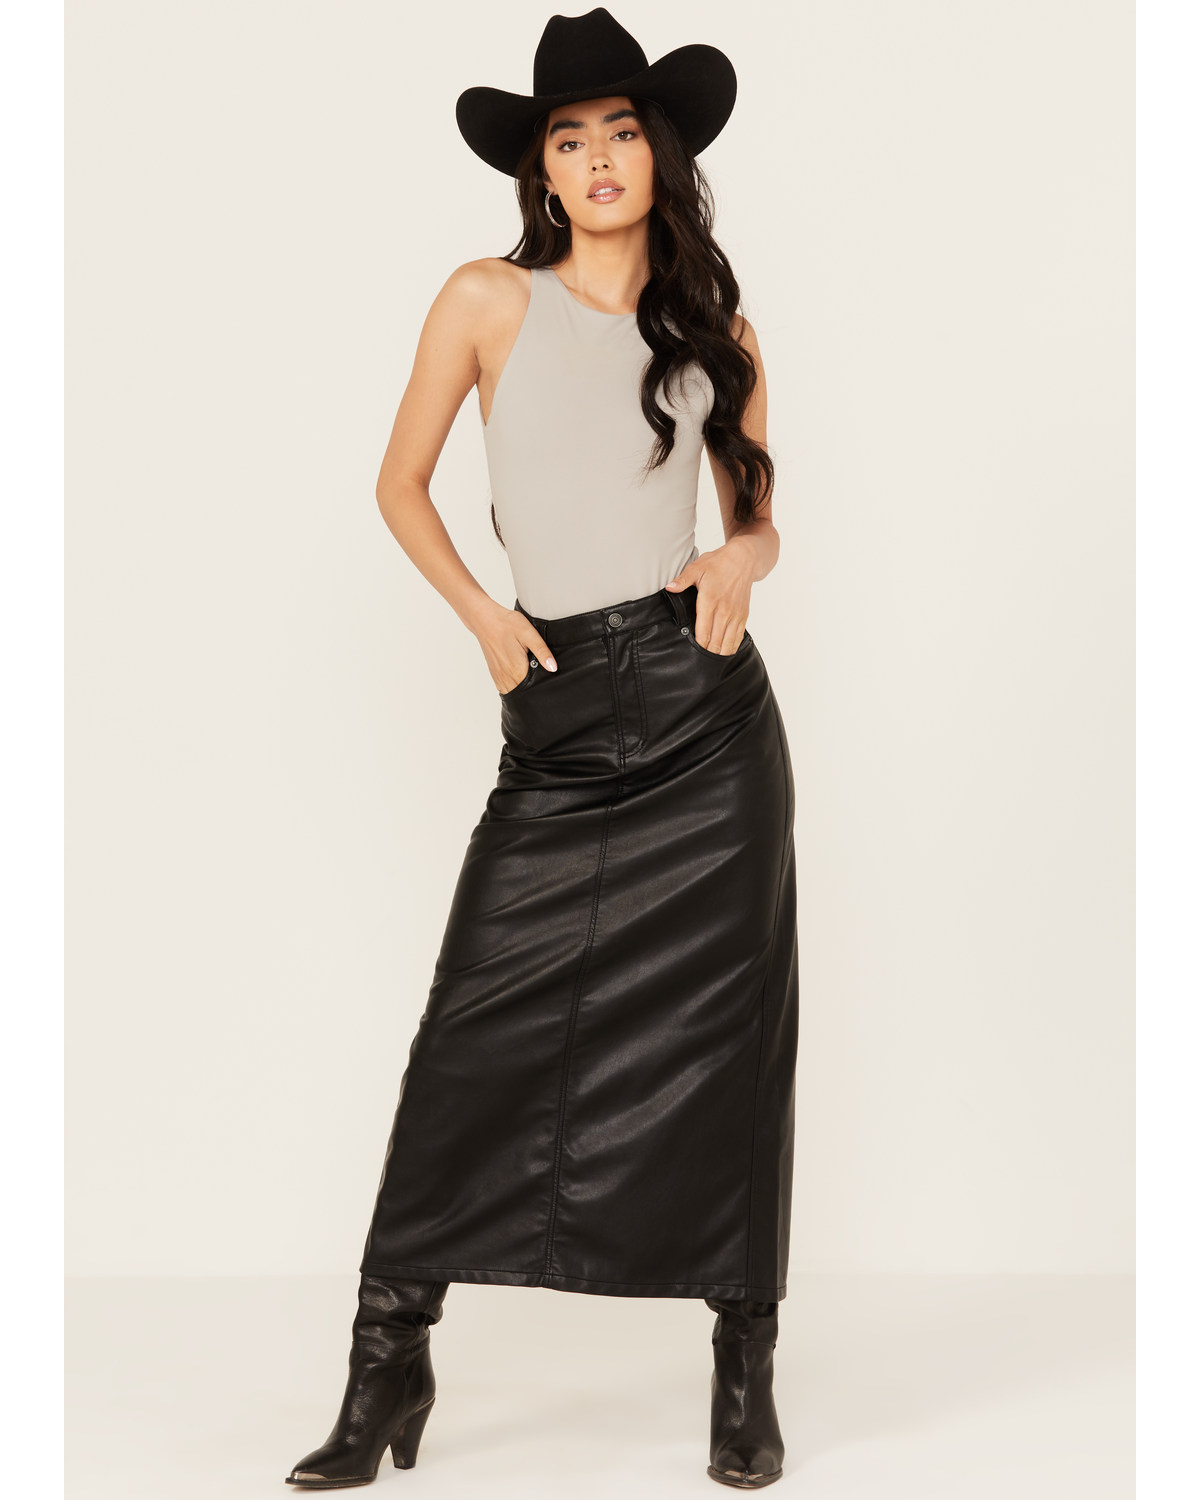 Free People Women's City Slicker Leather Maxi Skirt